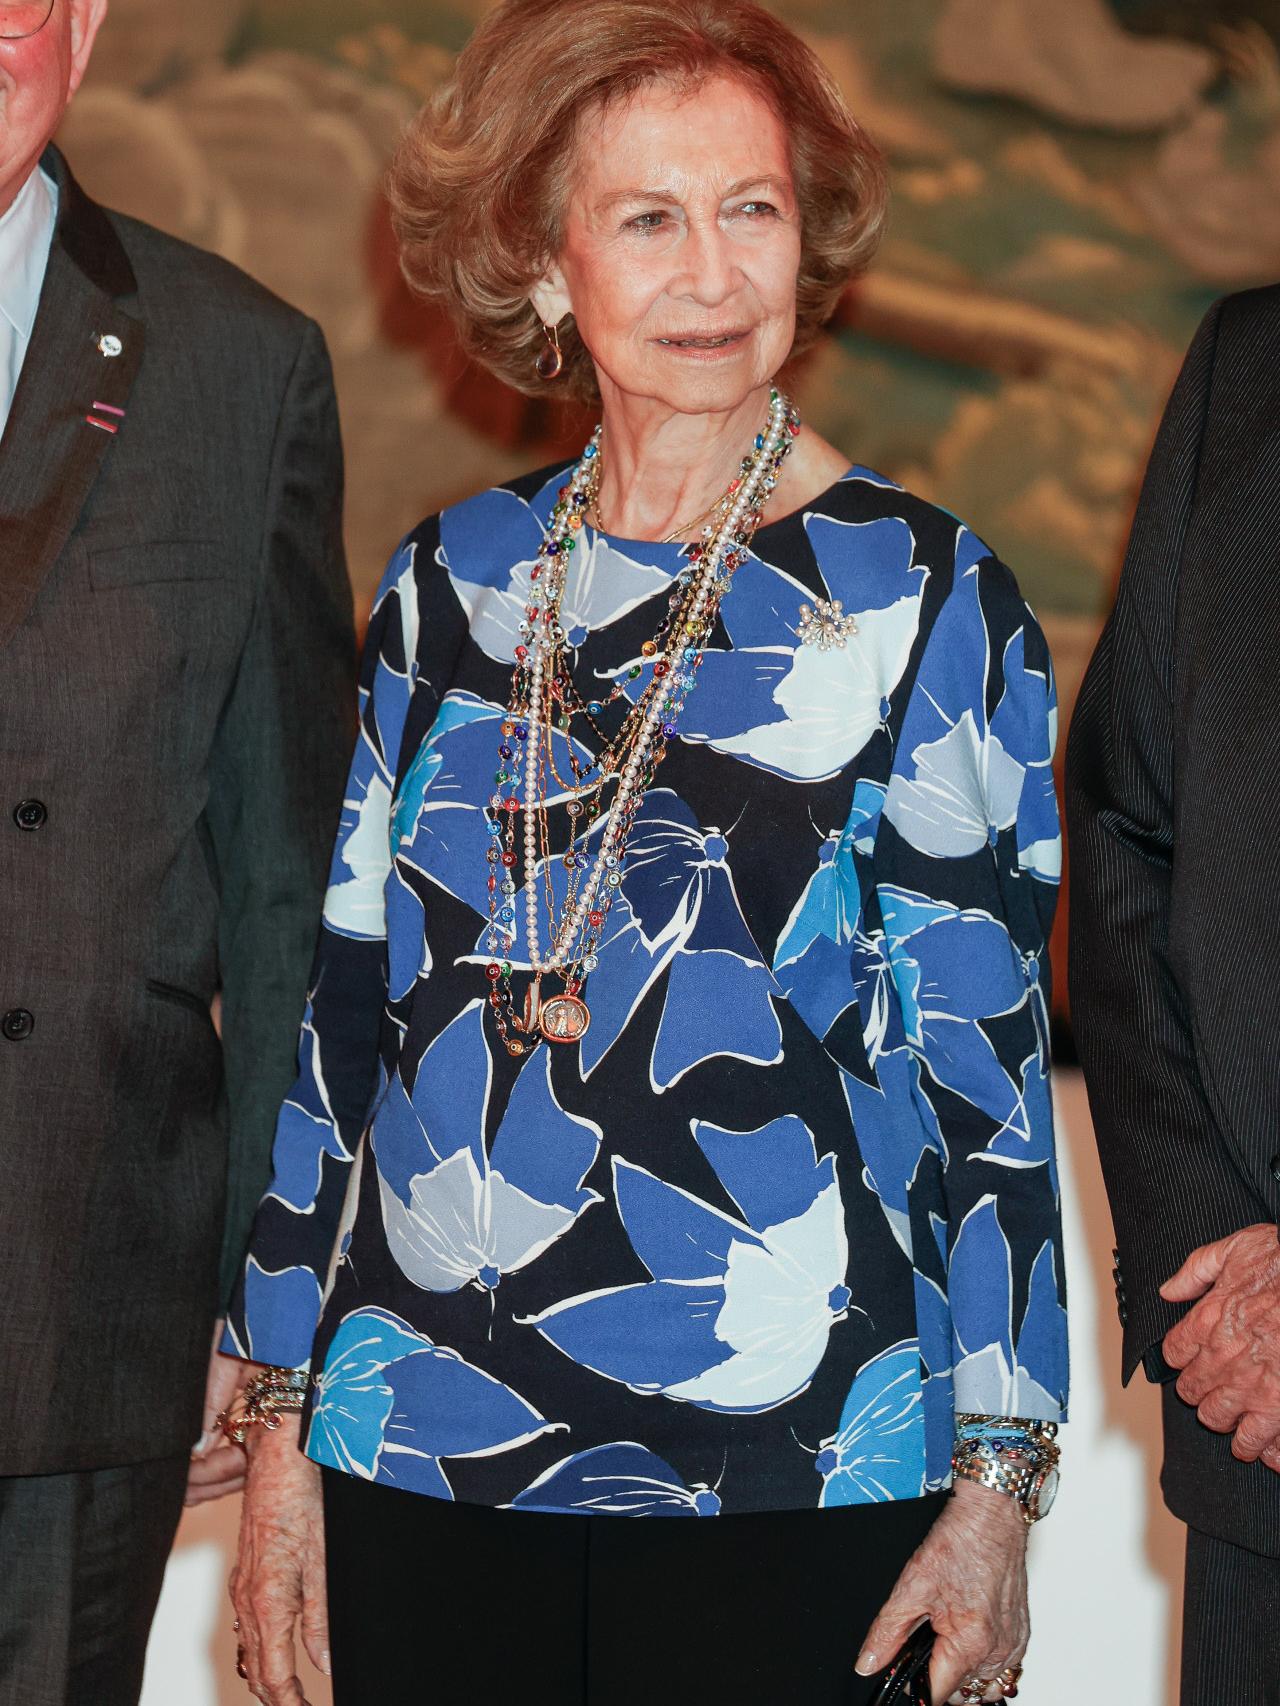 La reina Sofía lució varios collares sobre la blusa.